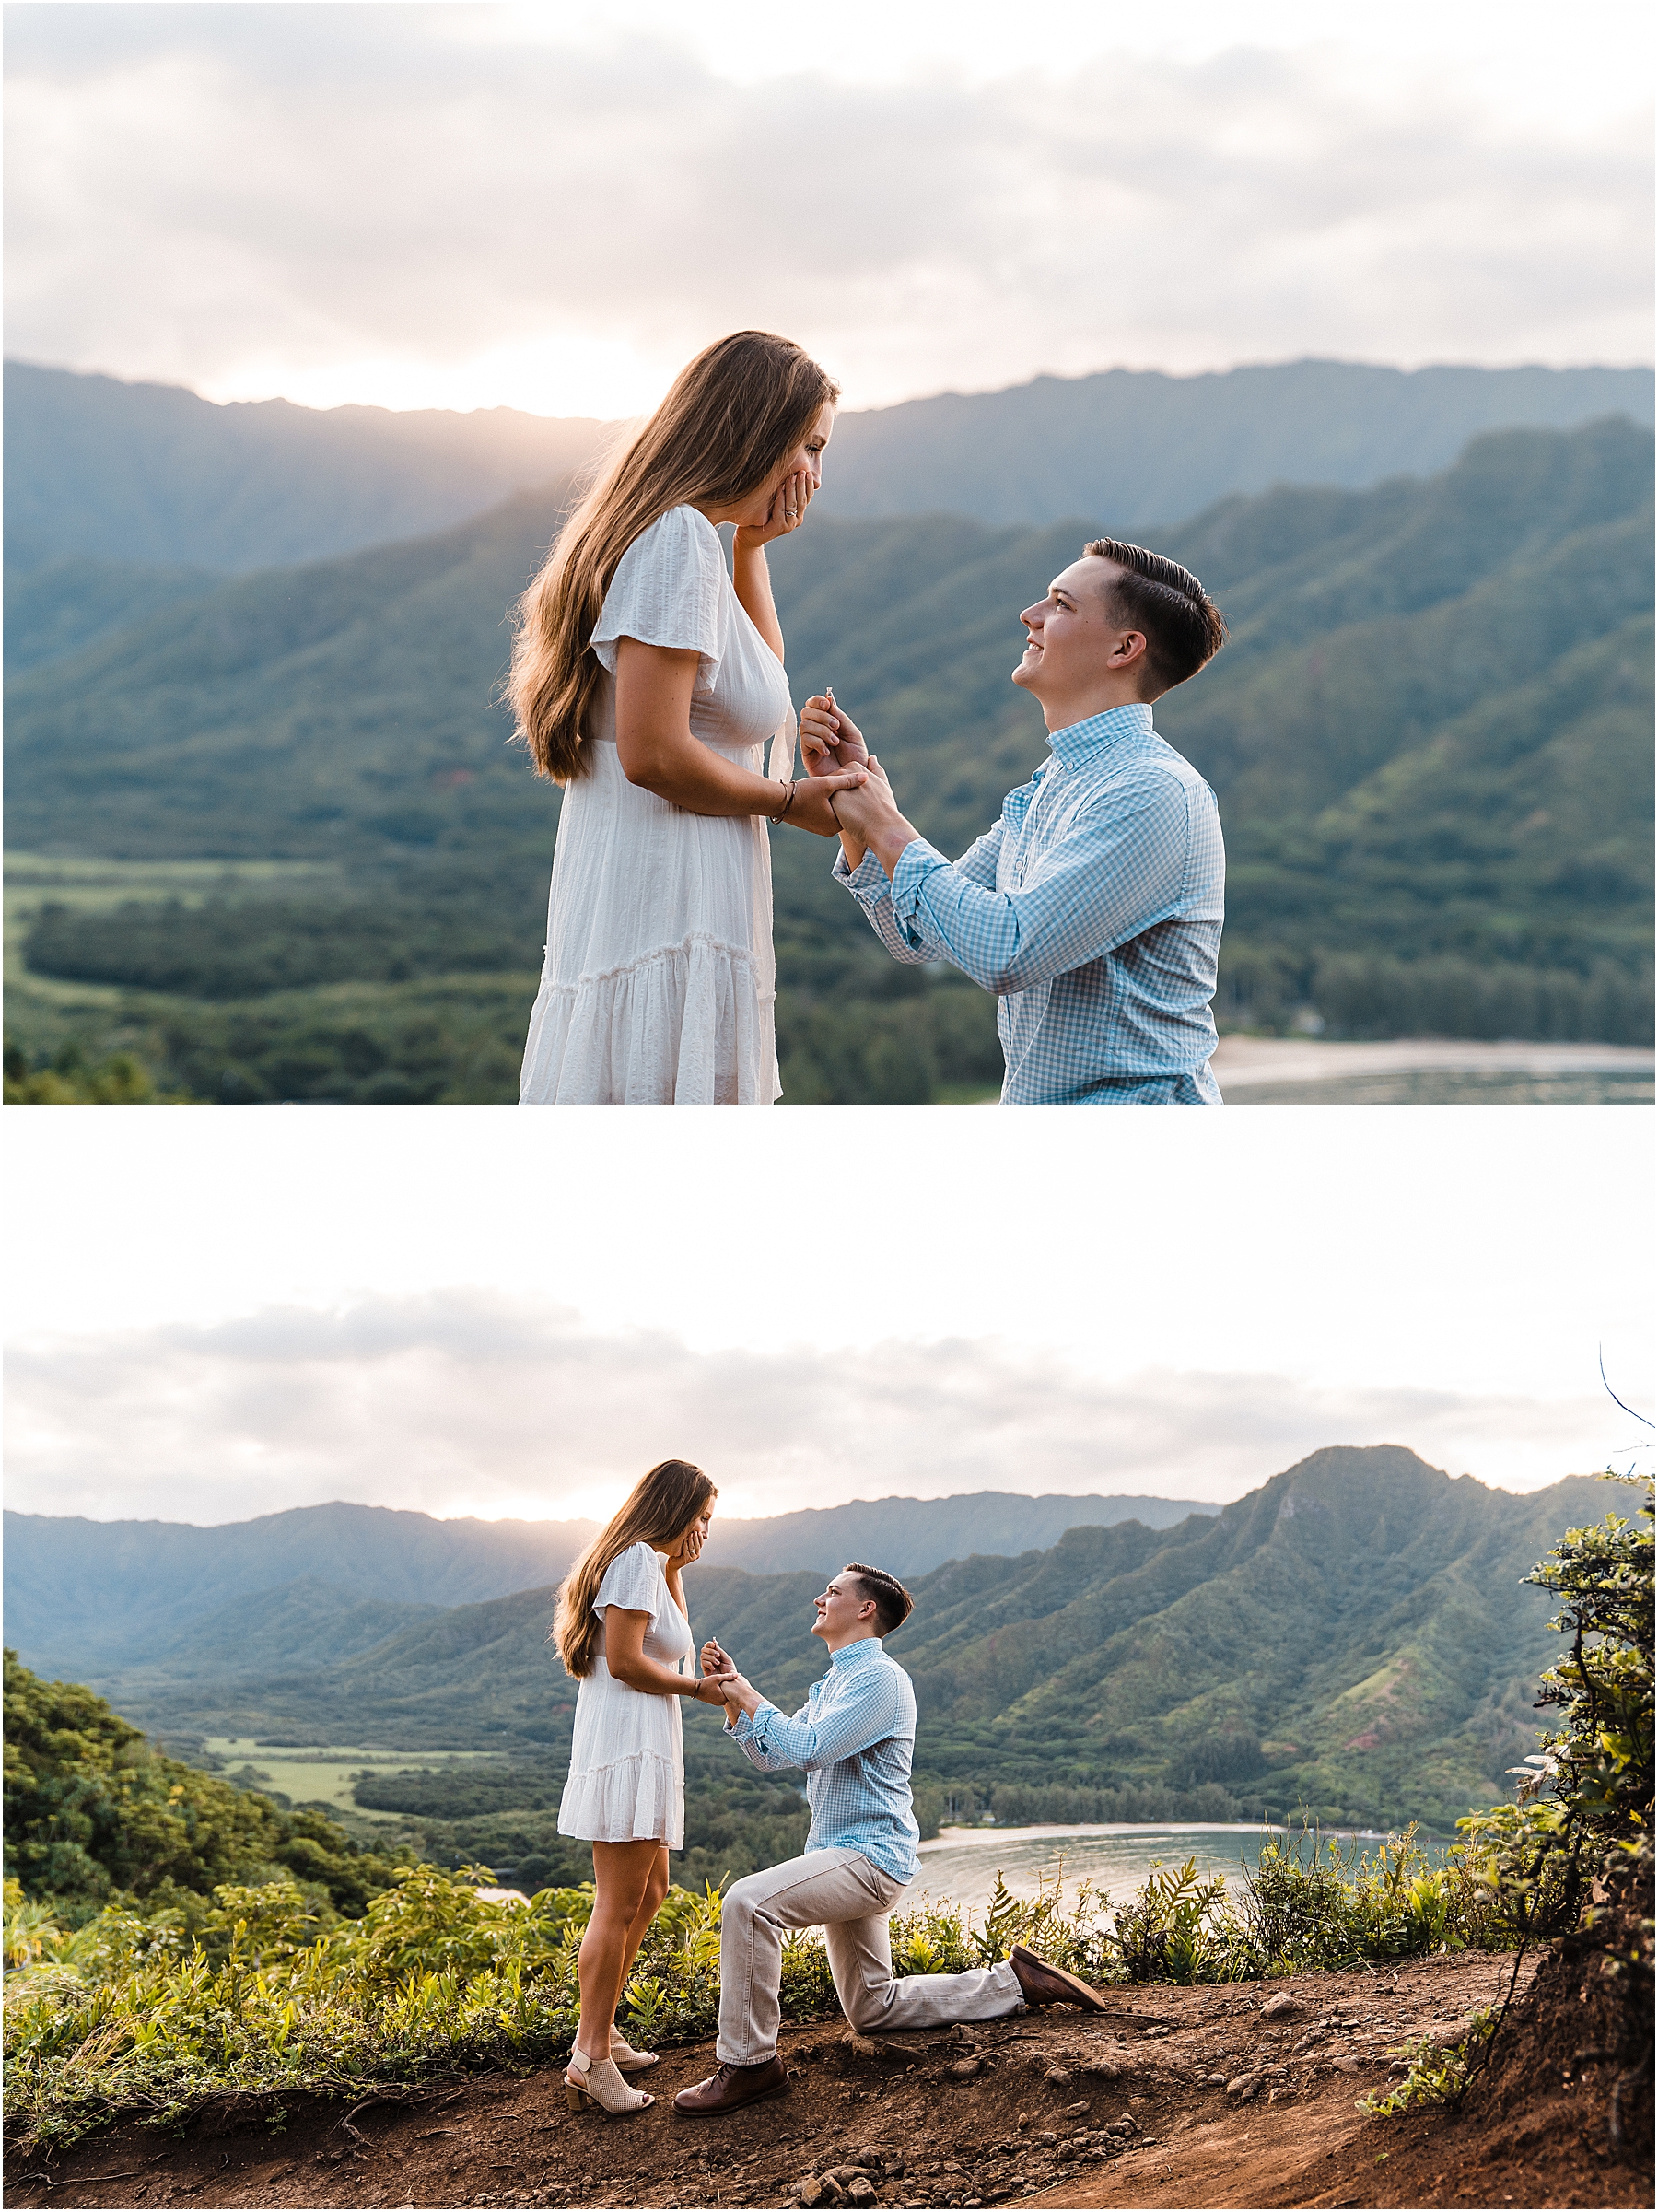 man proposing on a hike in hawaii